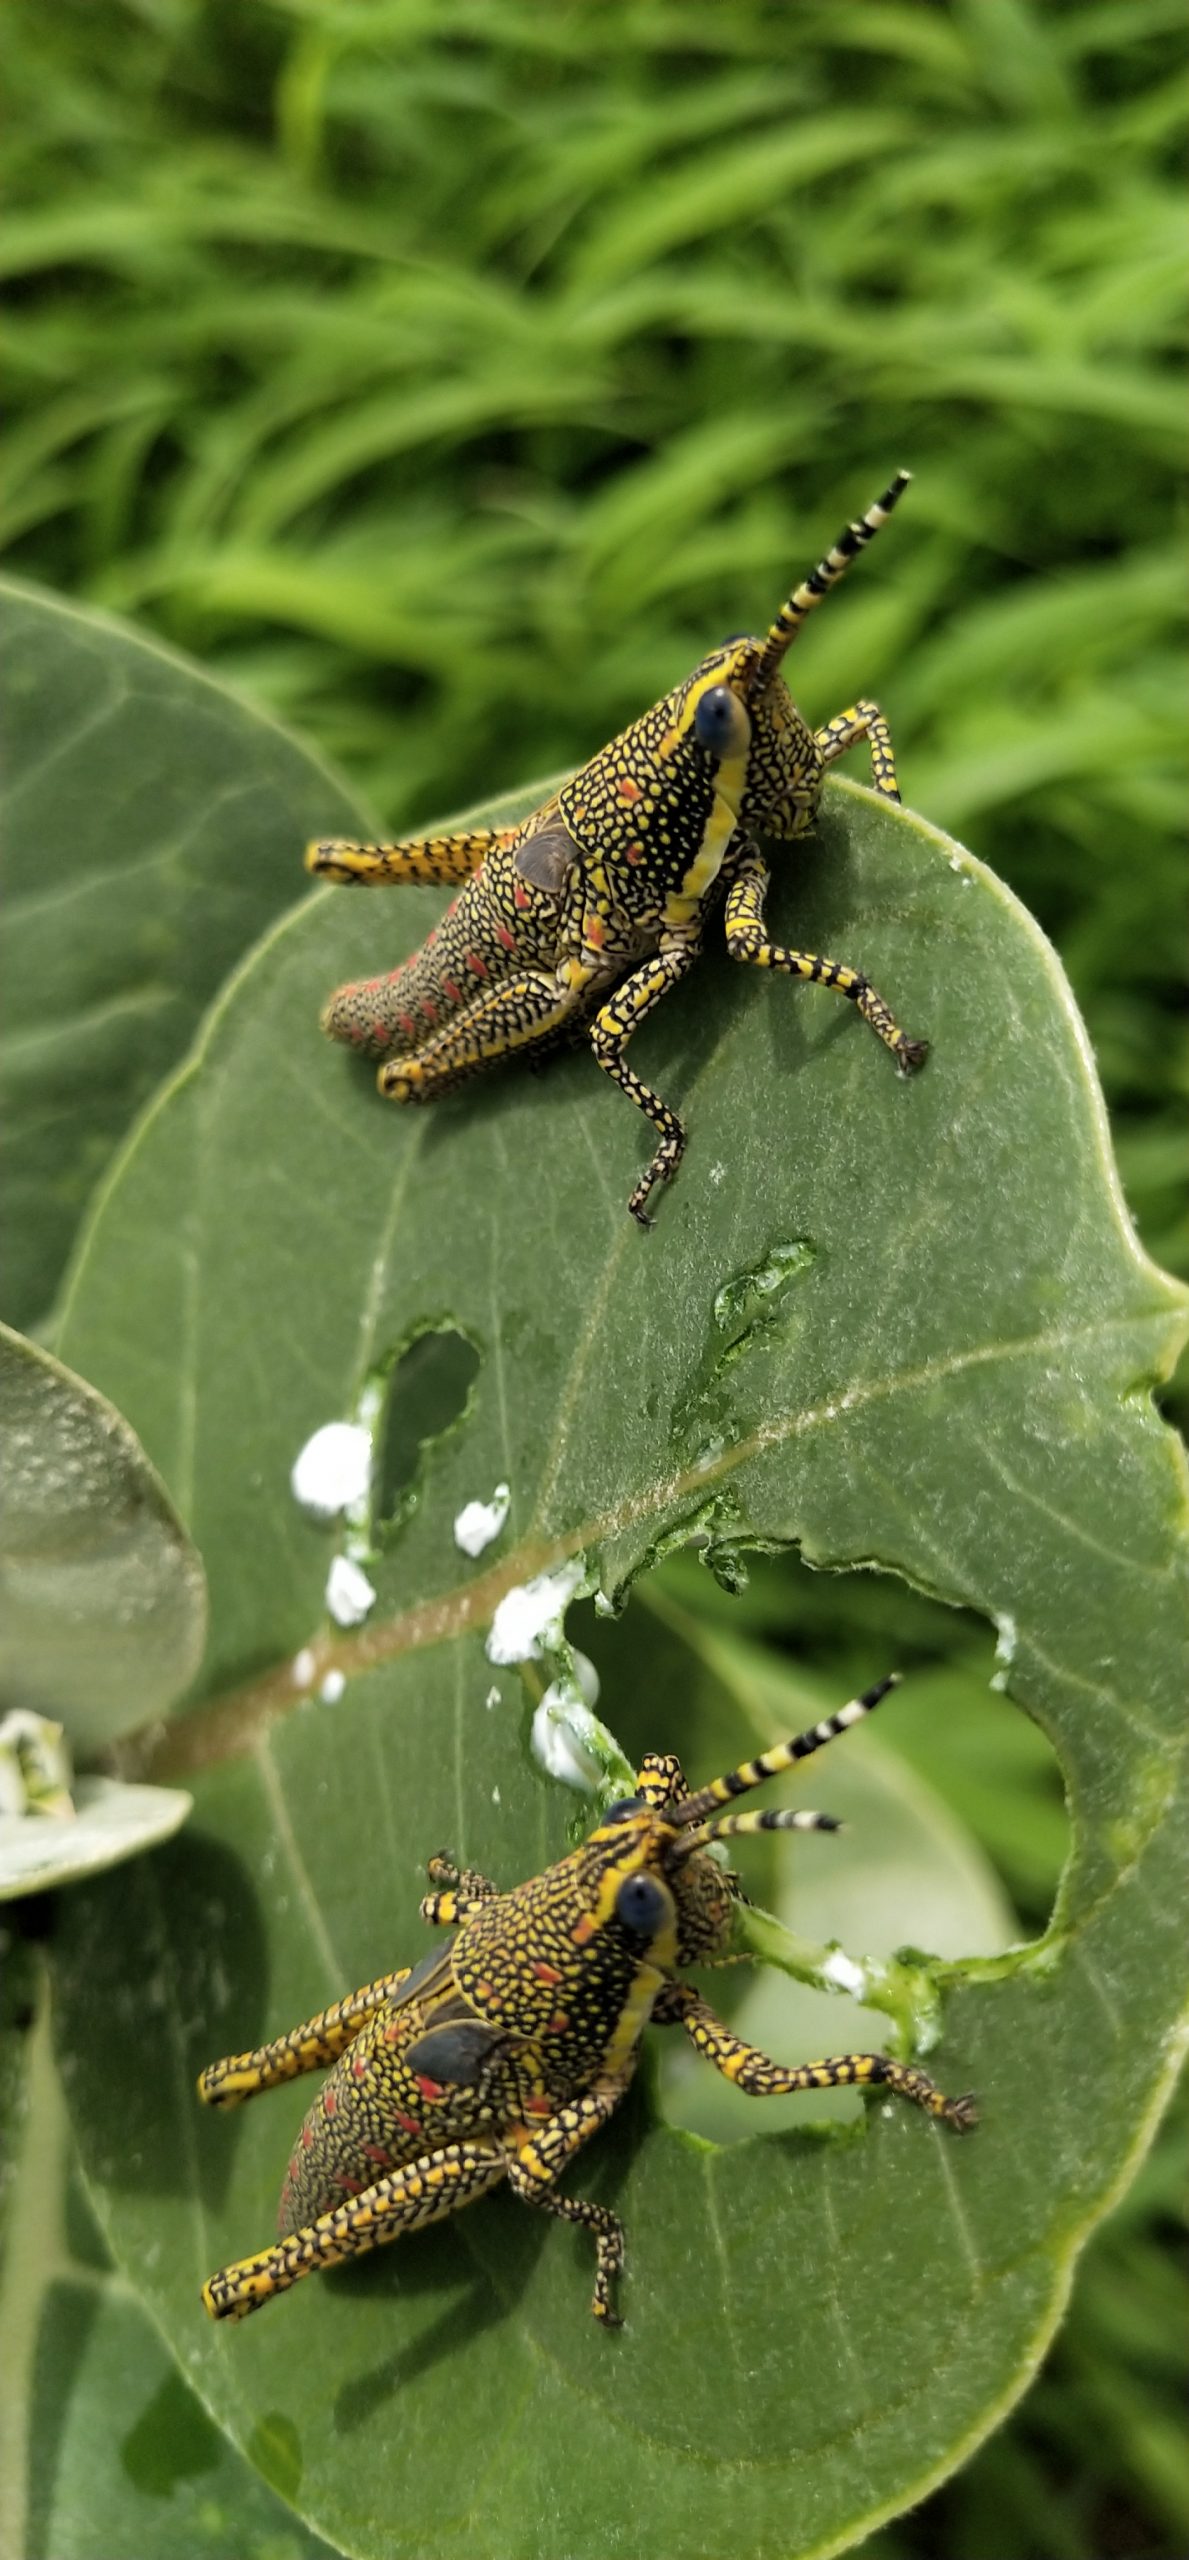 A leaf eaten boy grasshoppers